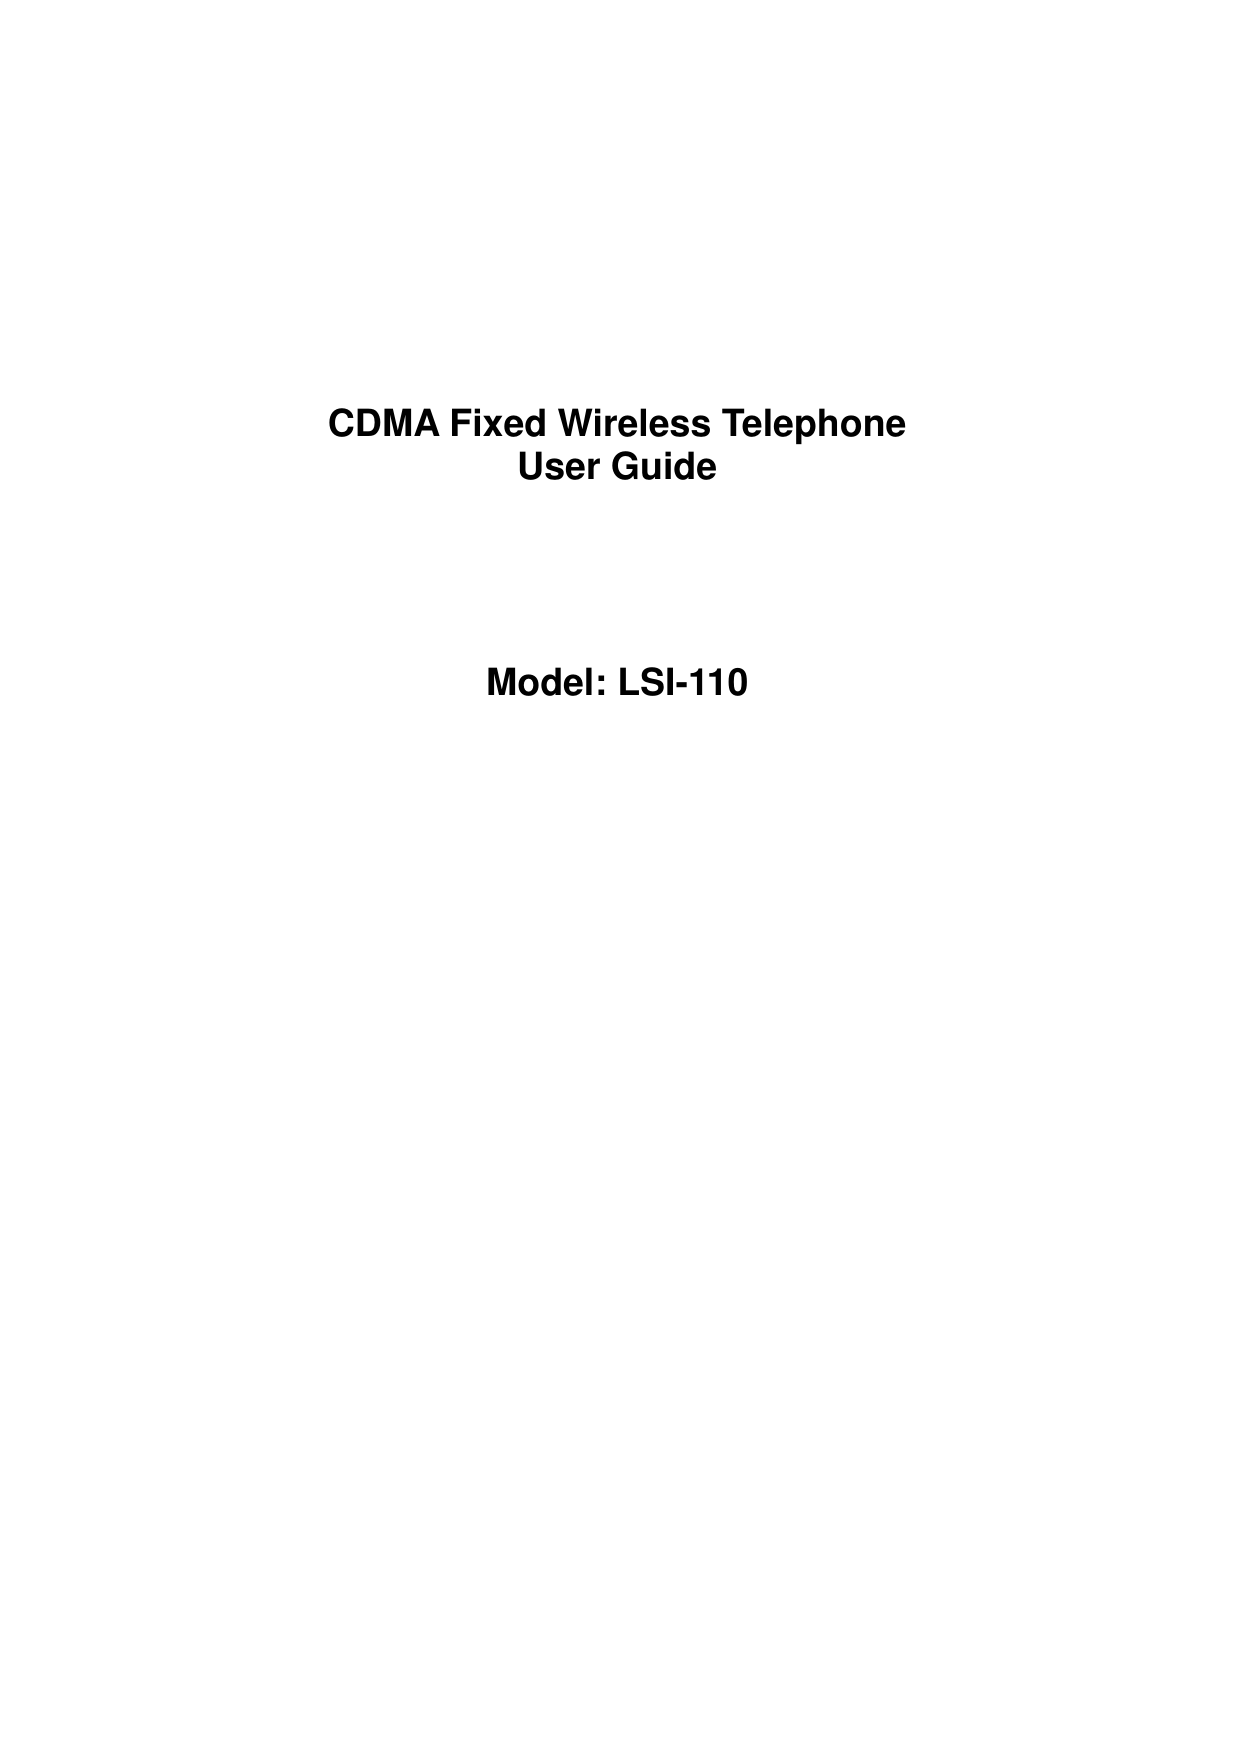 CDMA Fixed Wireless Telephone User Guide     Model: LSI-110 